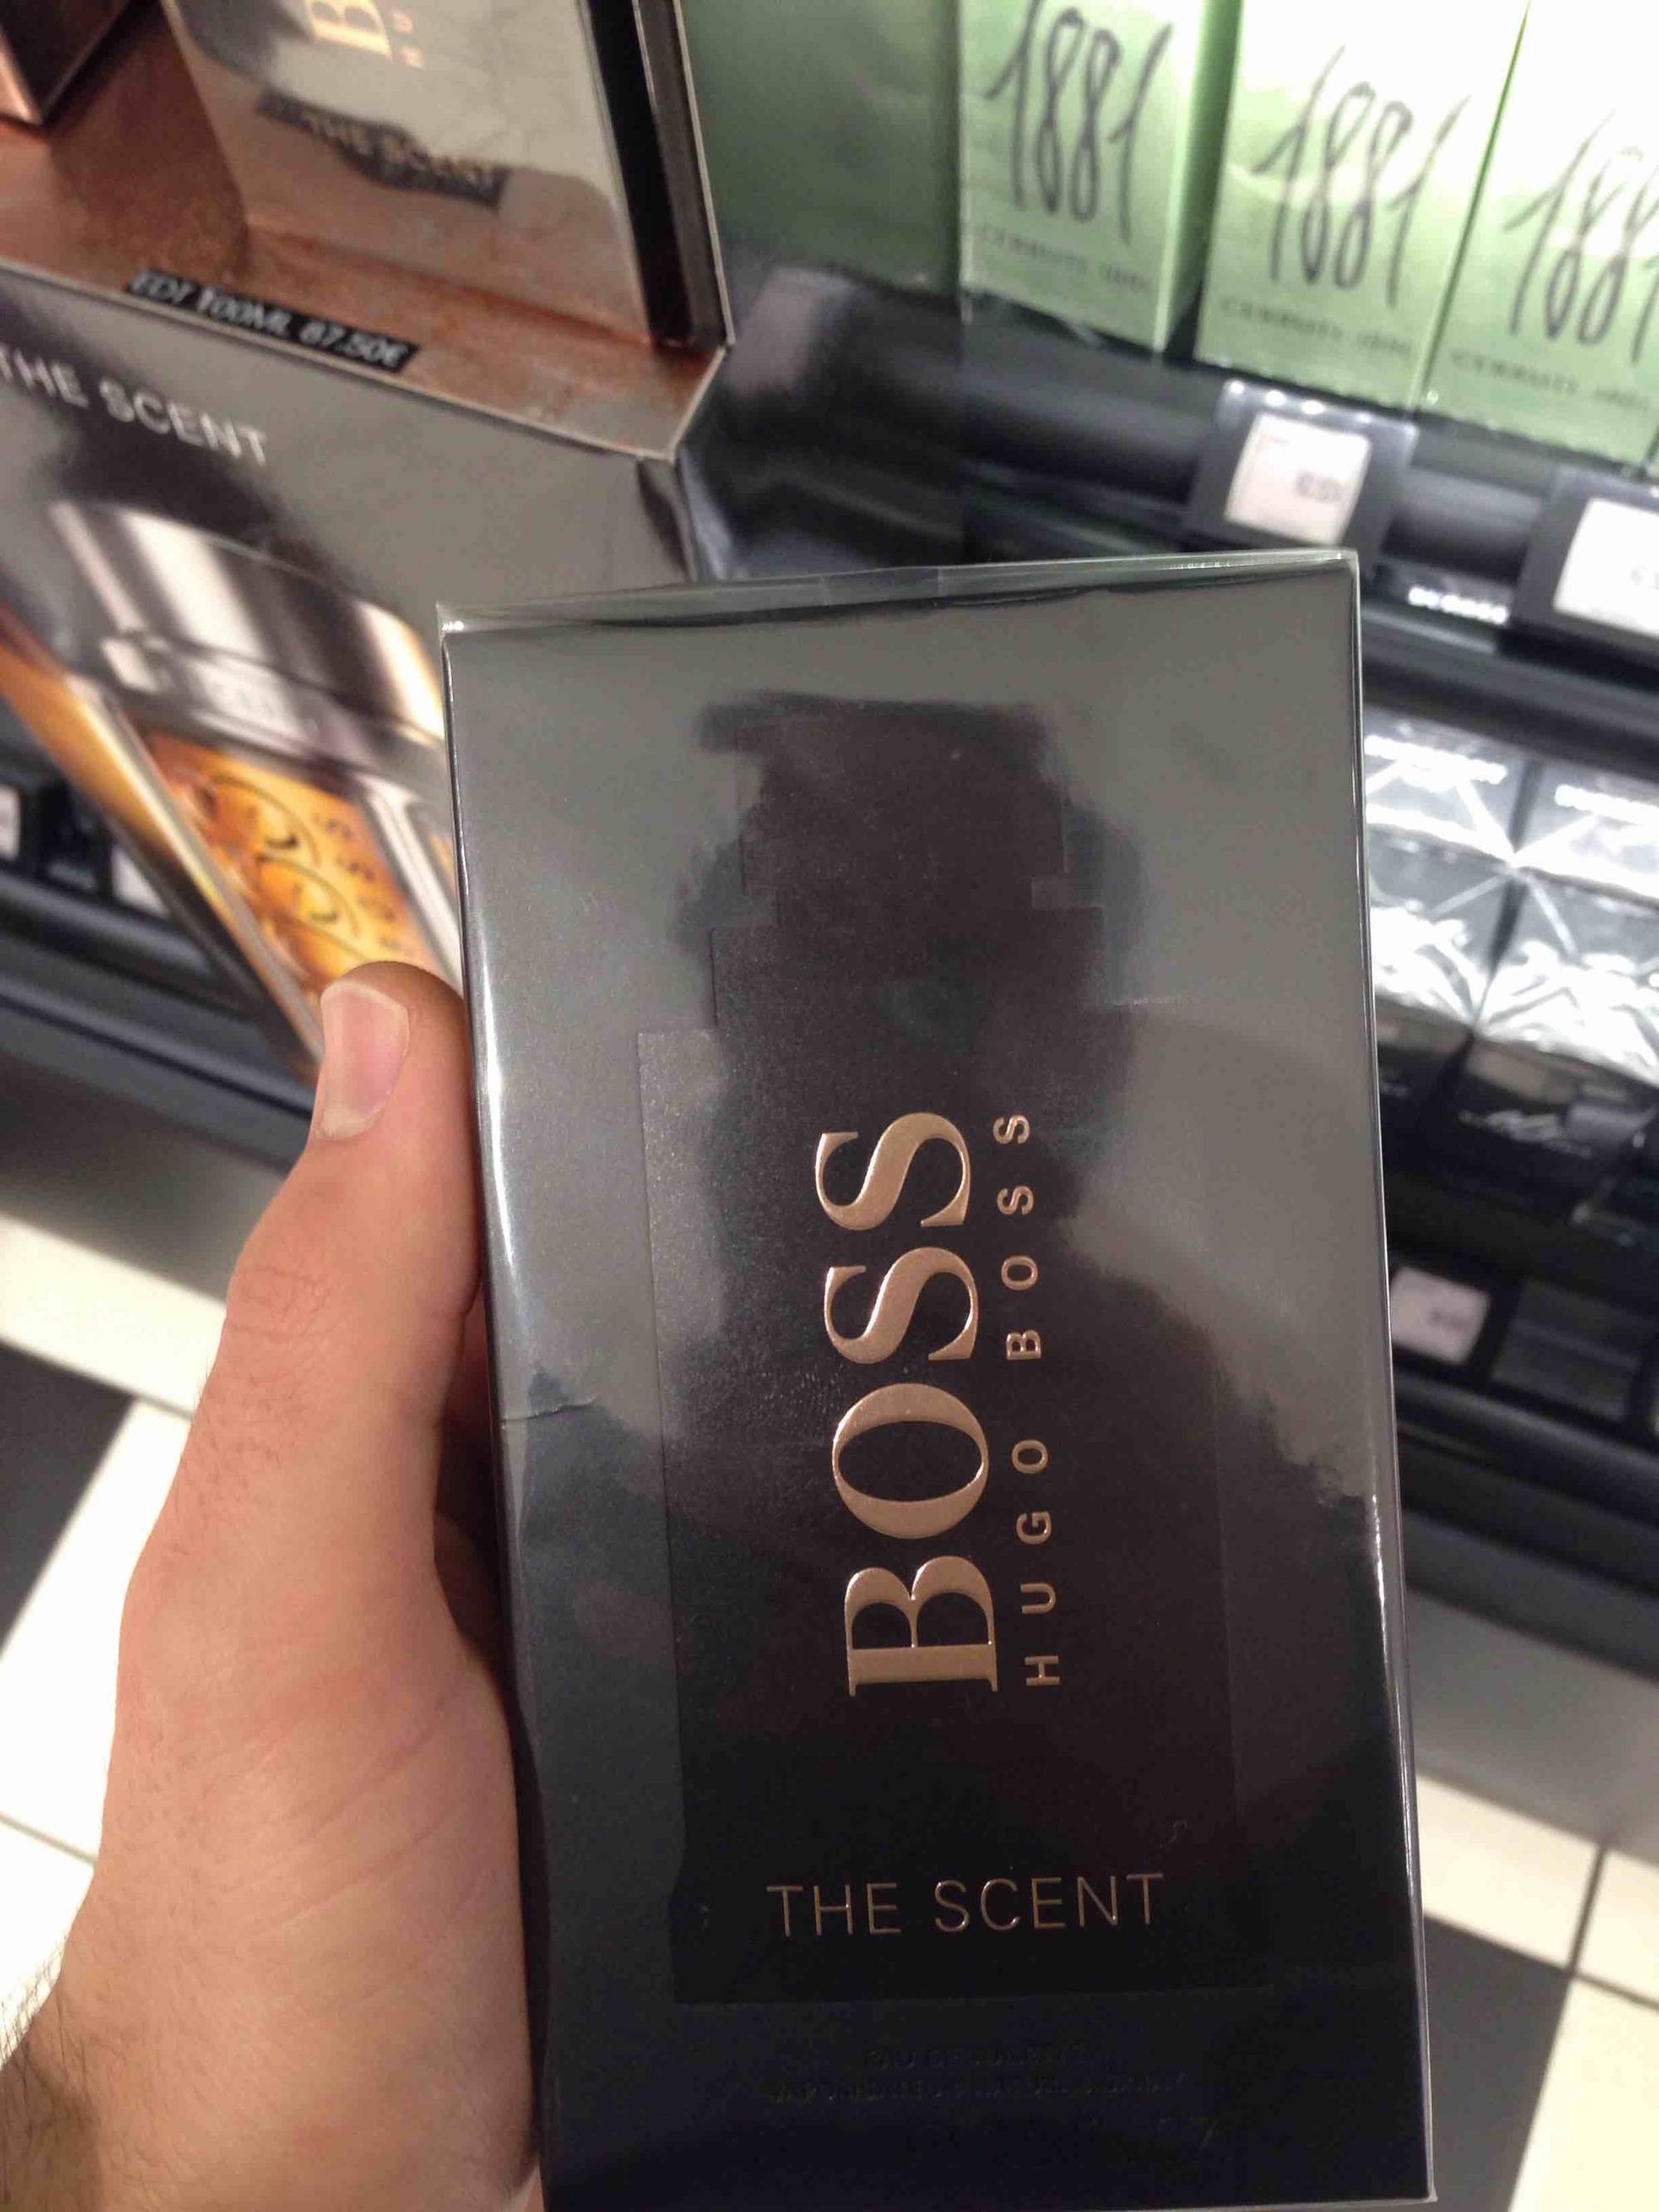 HUGO BOSS - The scent